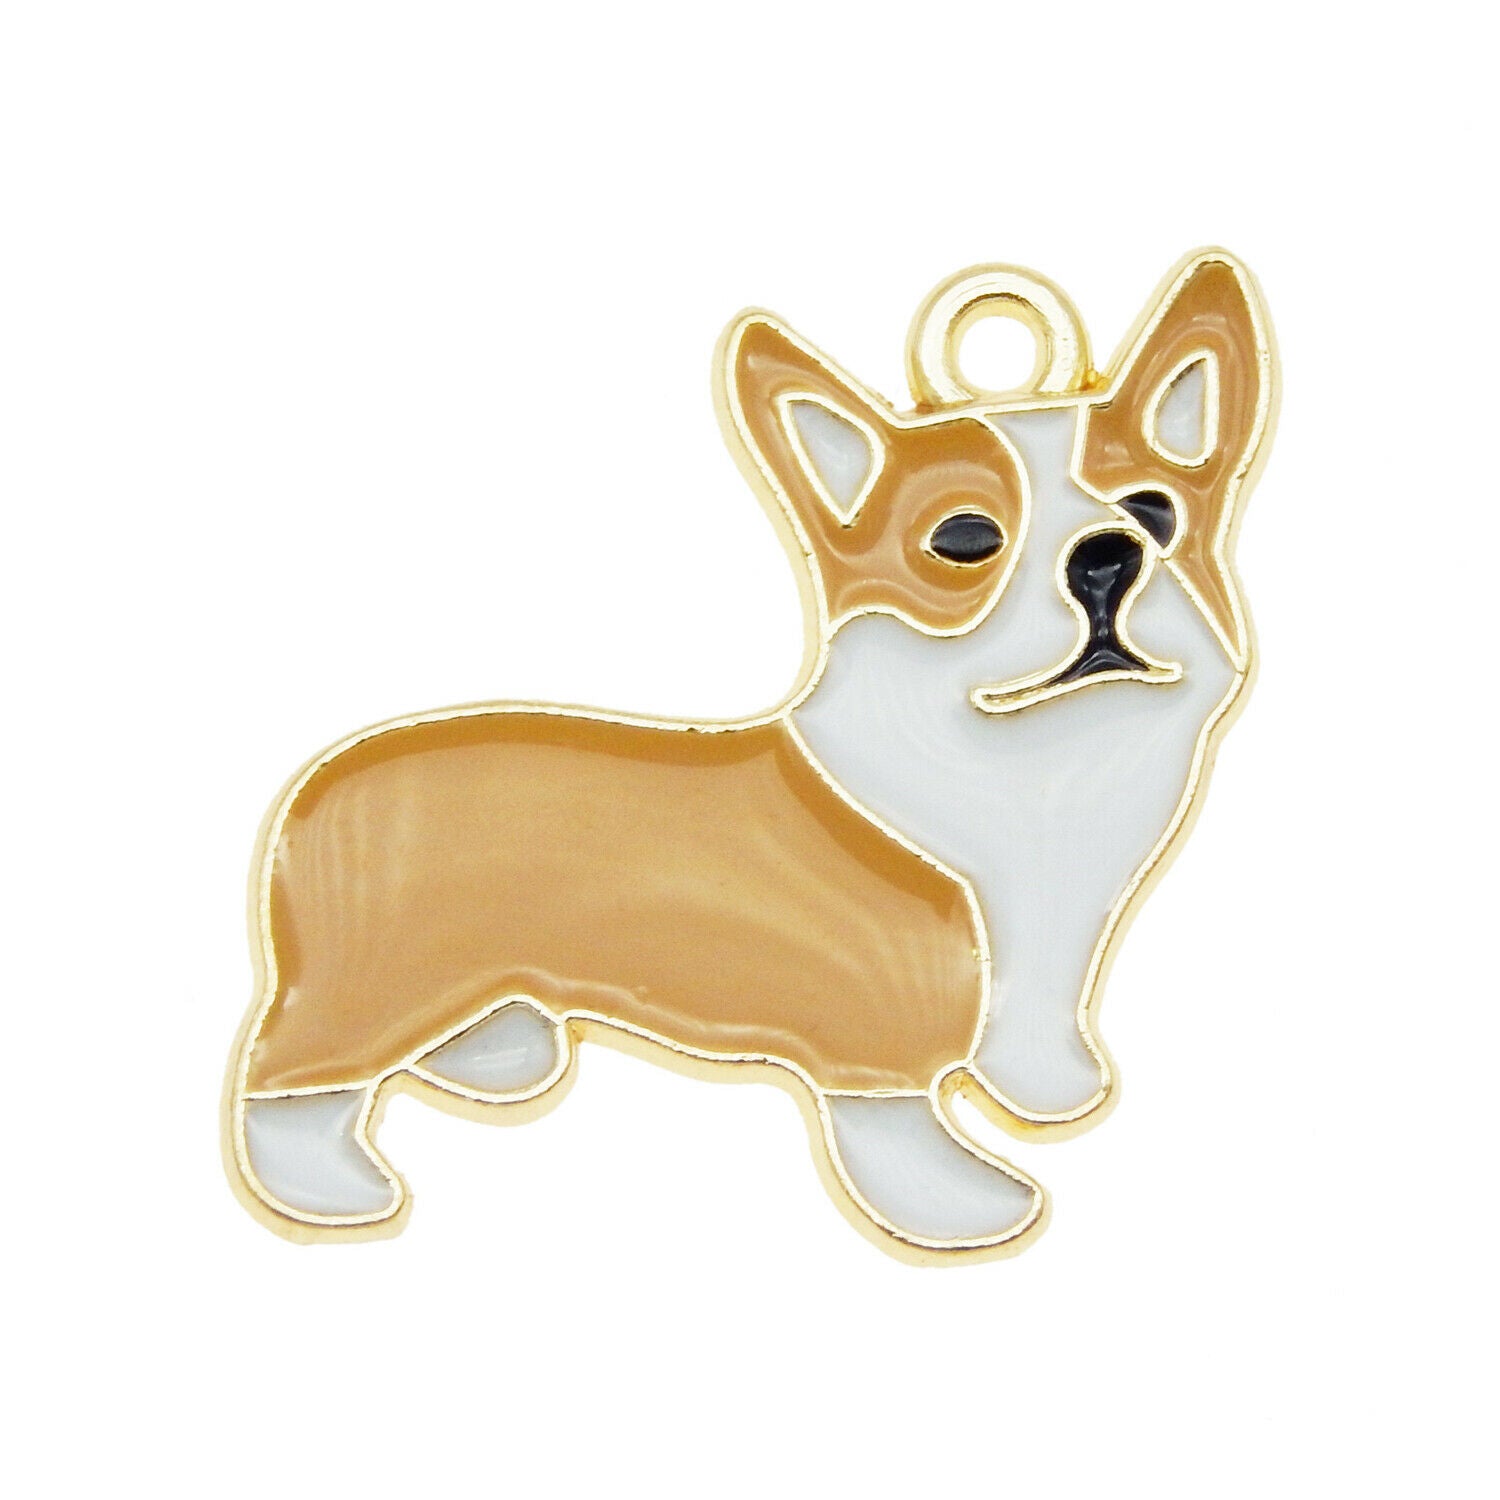 10 pcs Enamel Puppy Dog Charm Corgi Alloy For Pendant Jewelry DIY Crafts 23*22mm